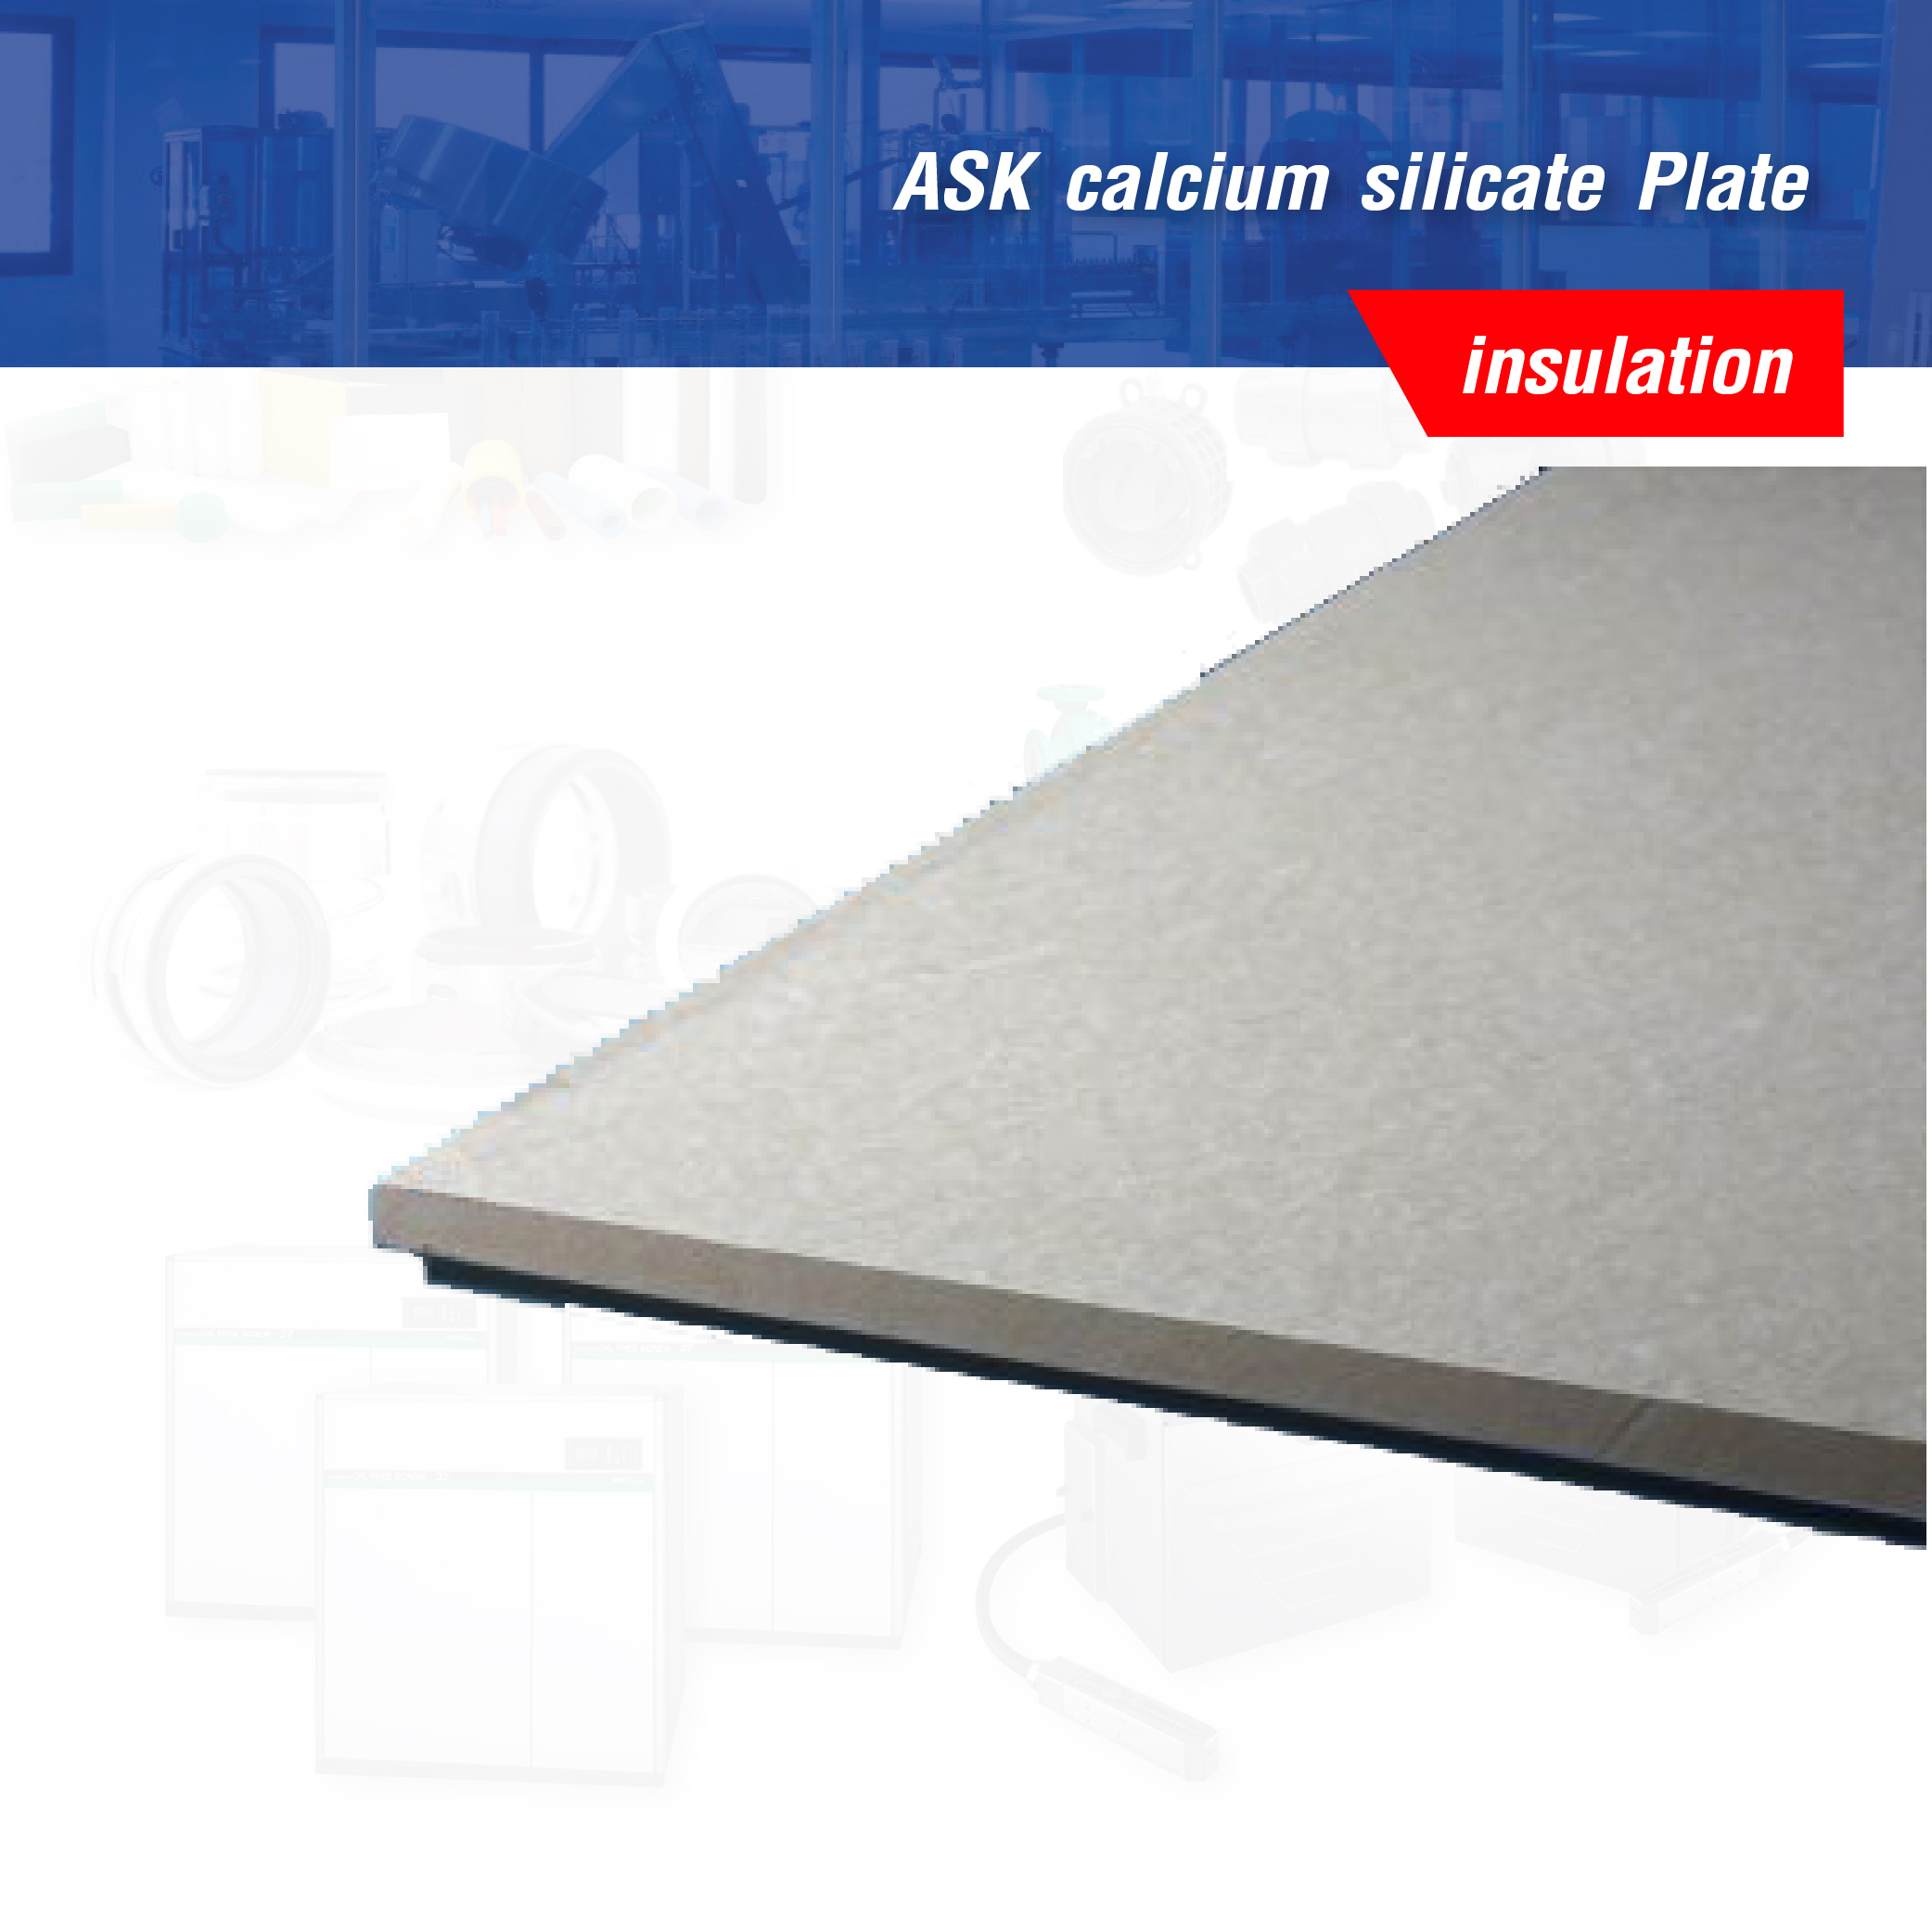 ASK calcium silicate Plate